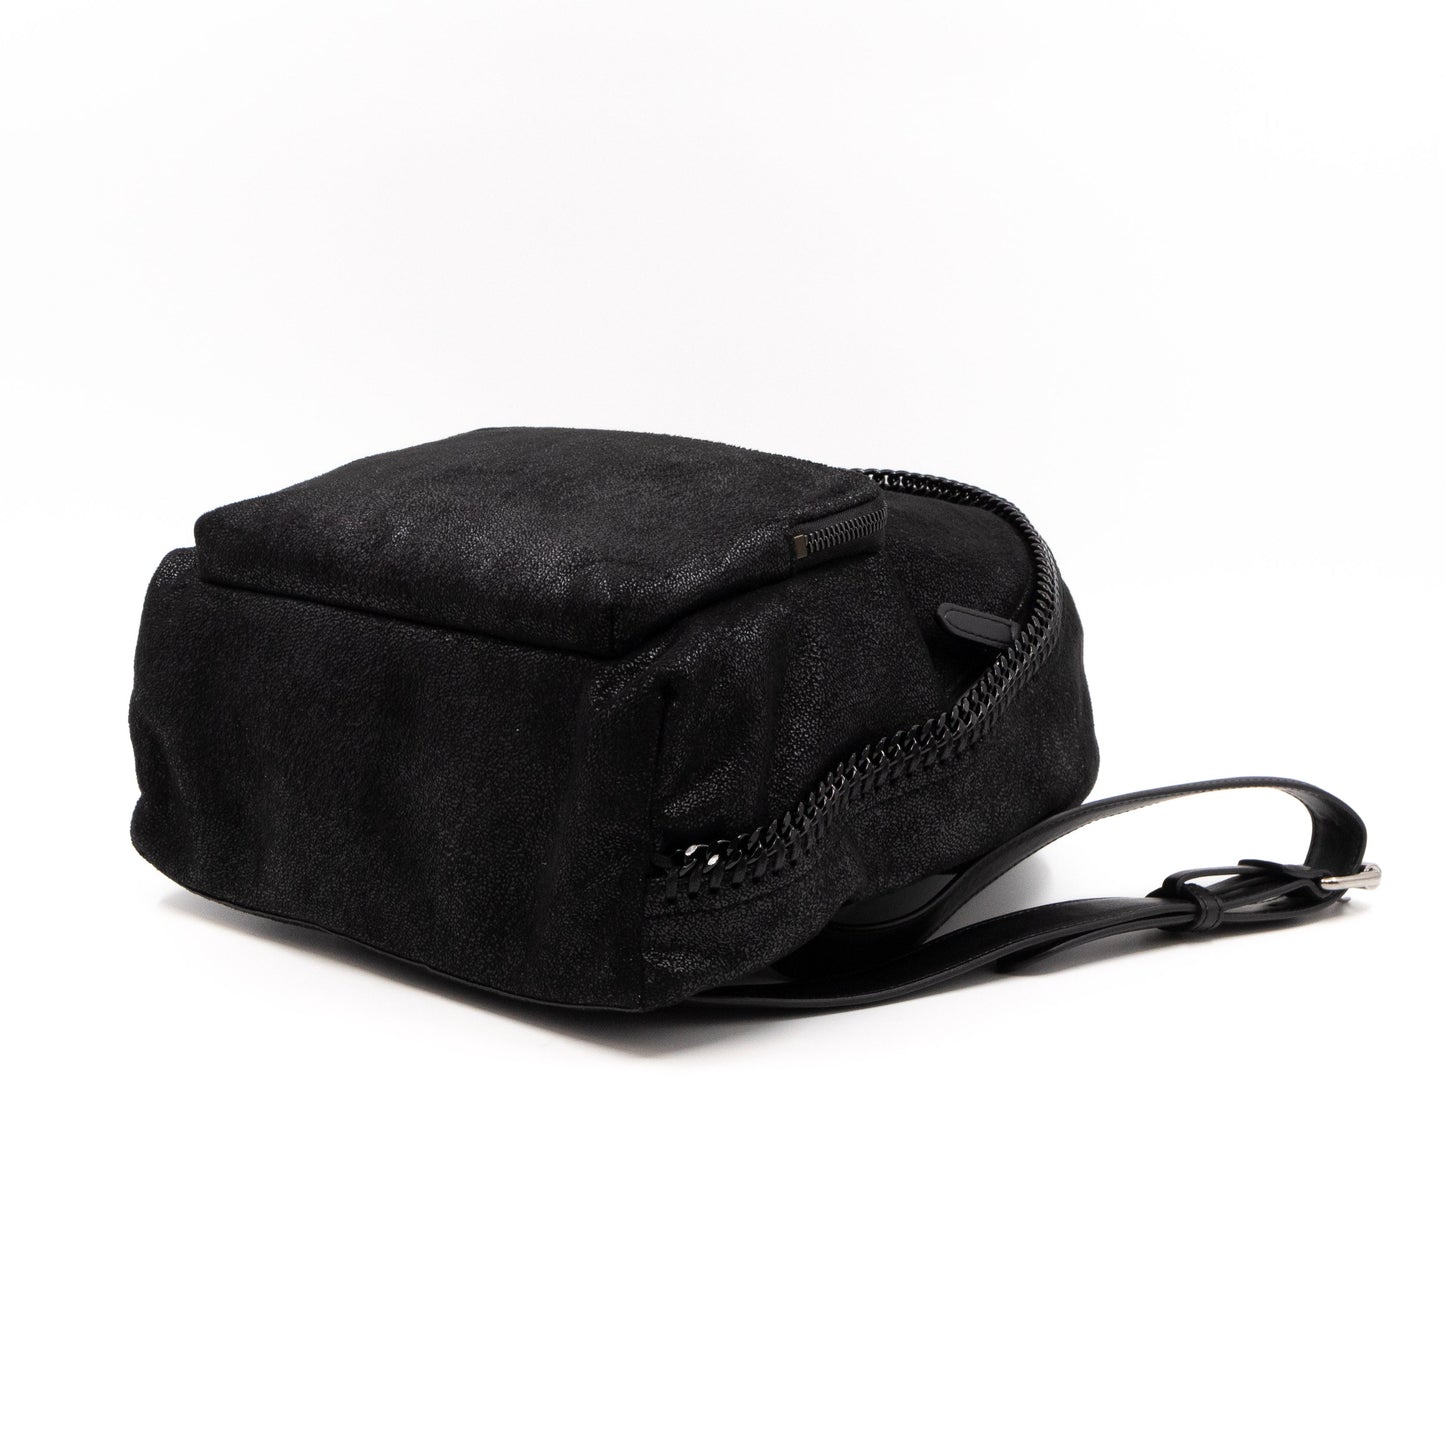 Falabella Small Backpack Black